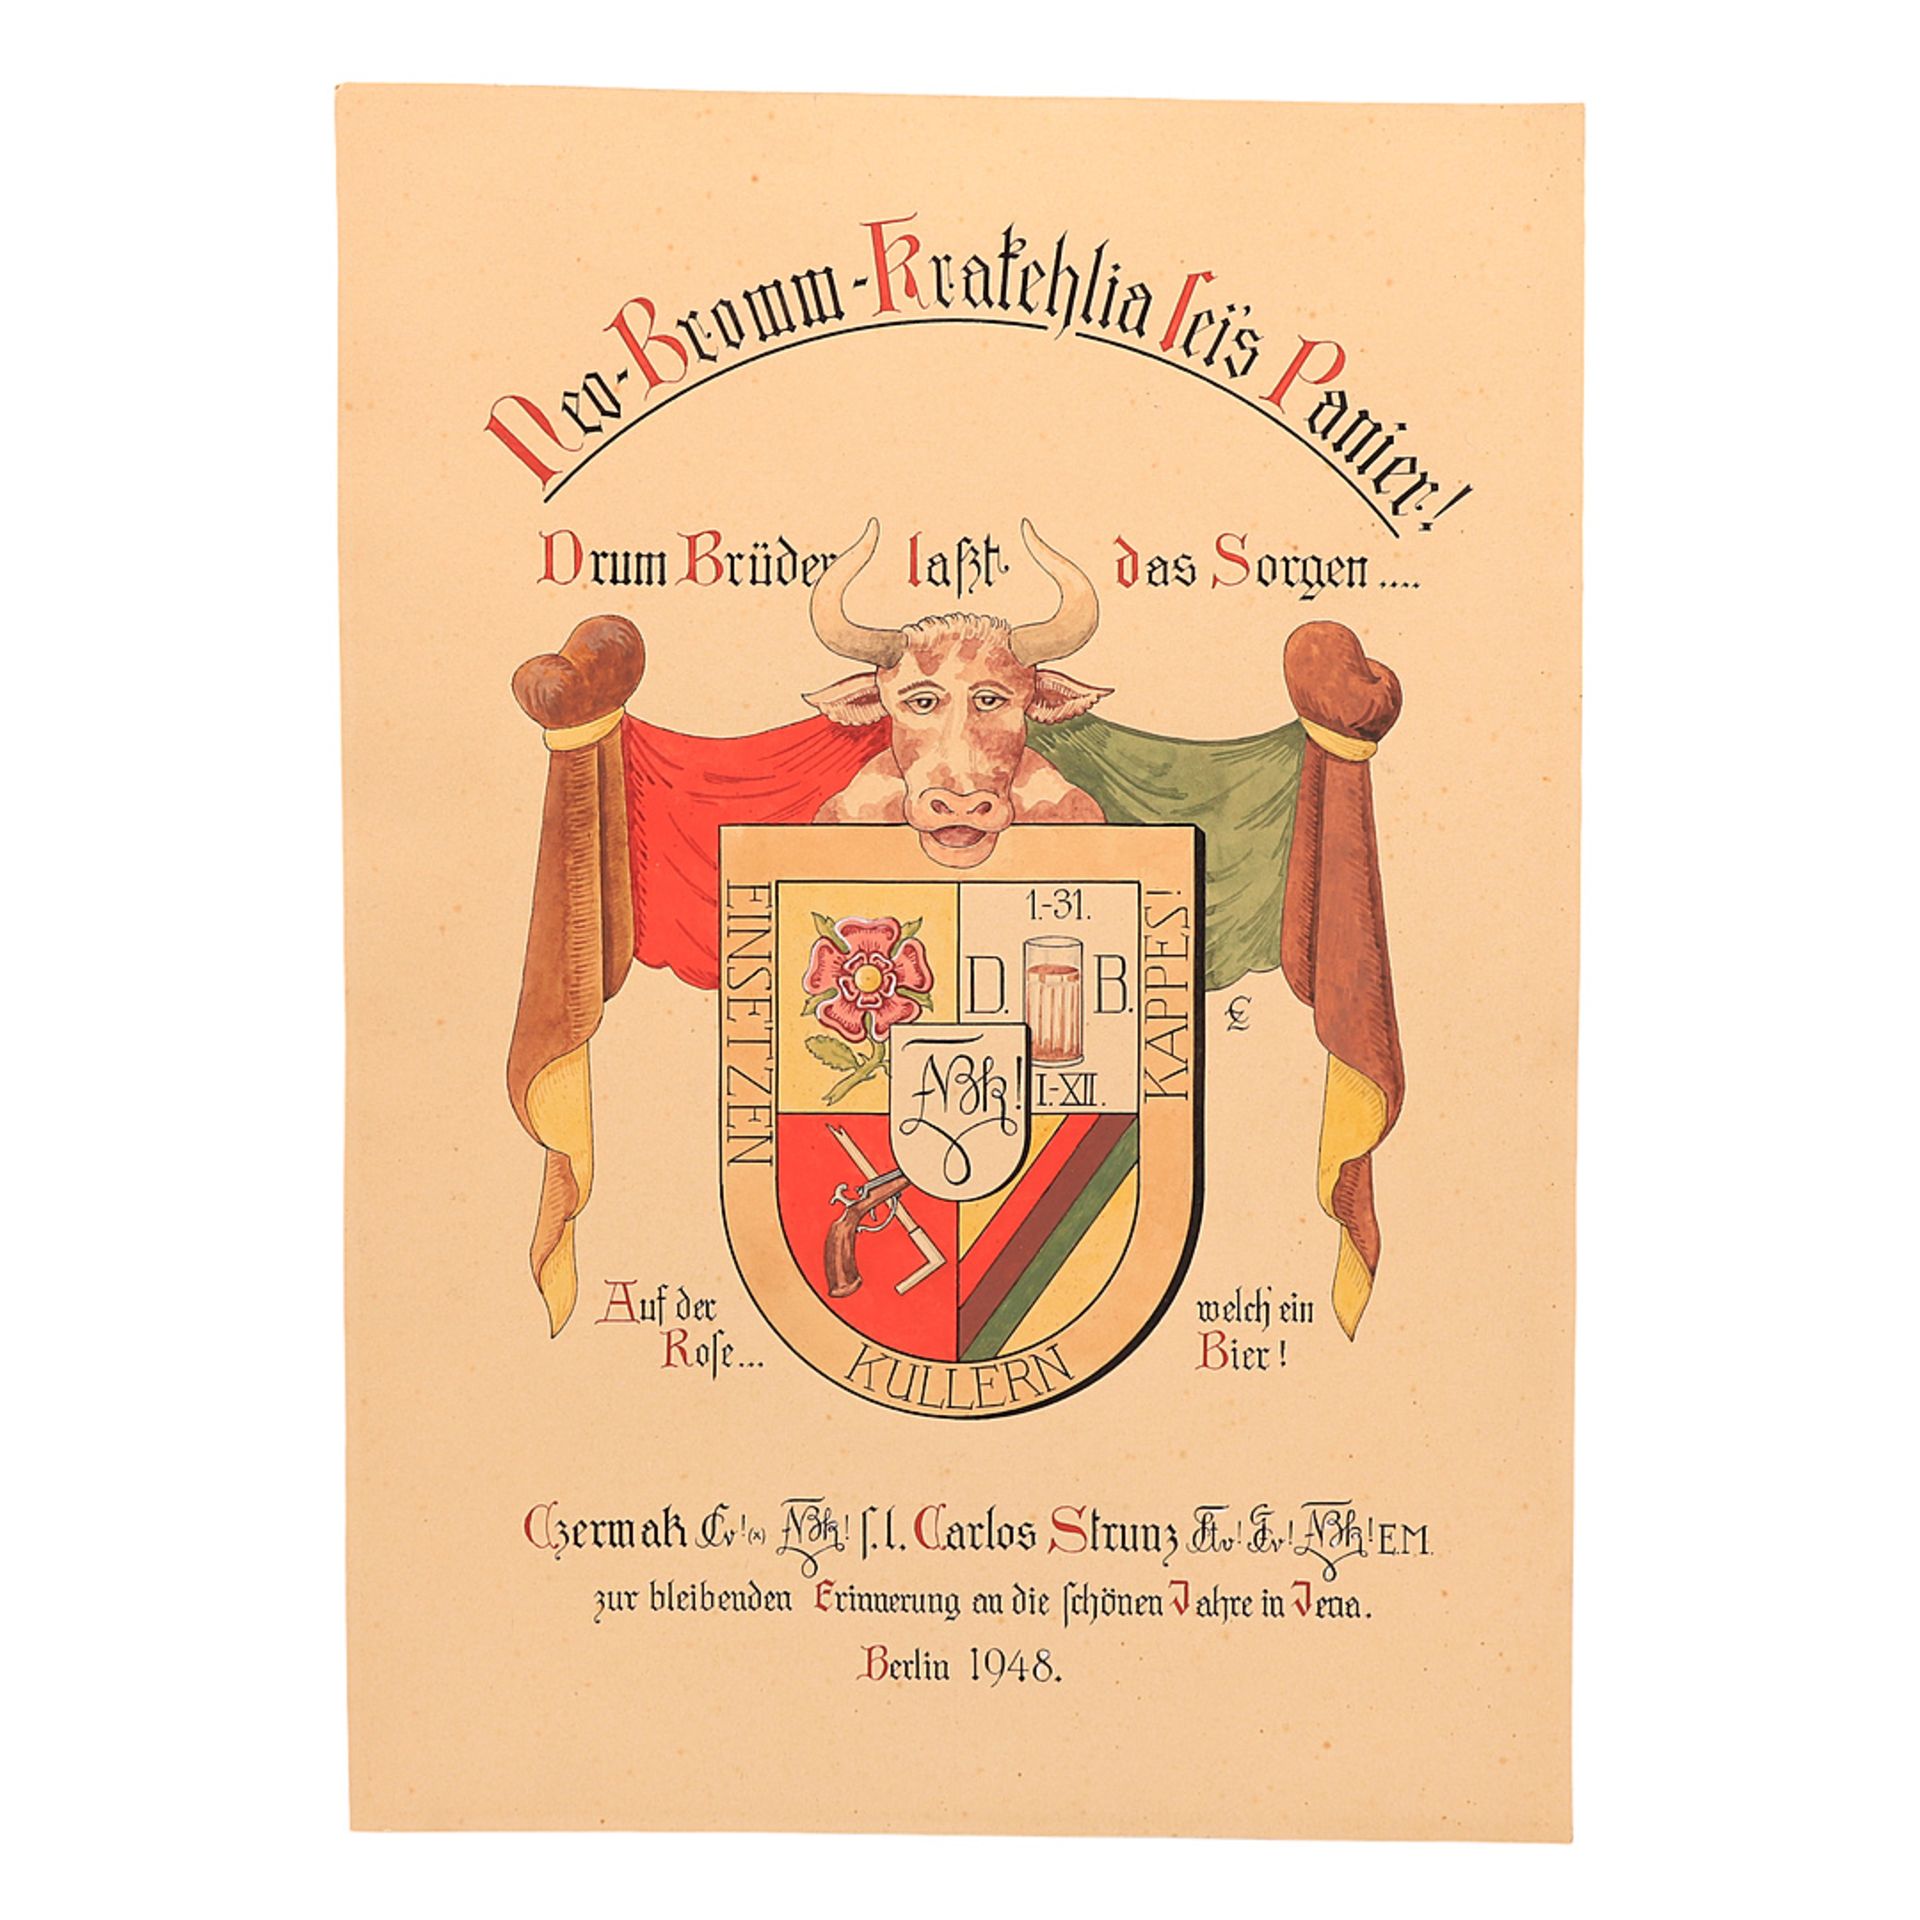 Studentica - Neo-Bromm-Krakehlia Jena Coat of arms watercolor, 1948